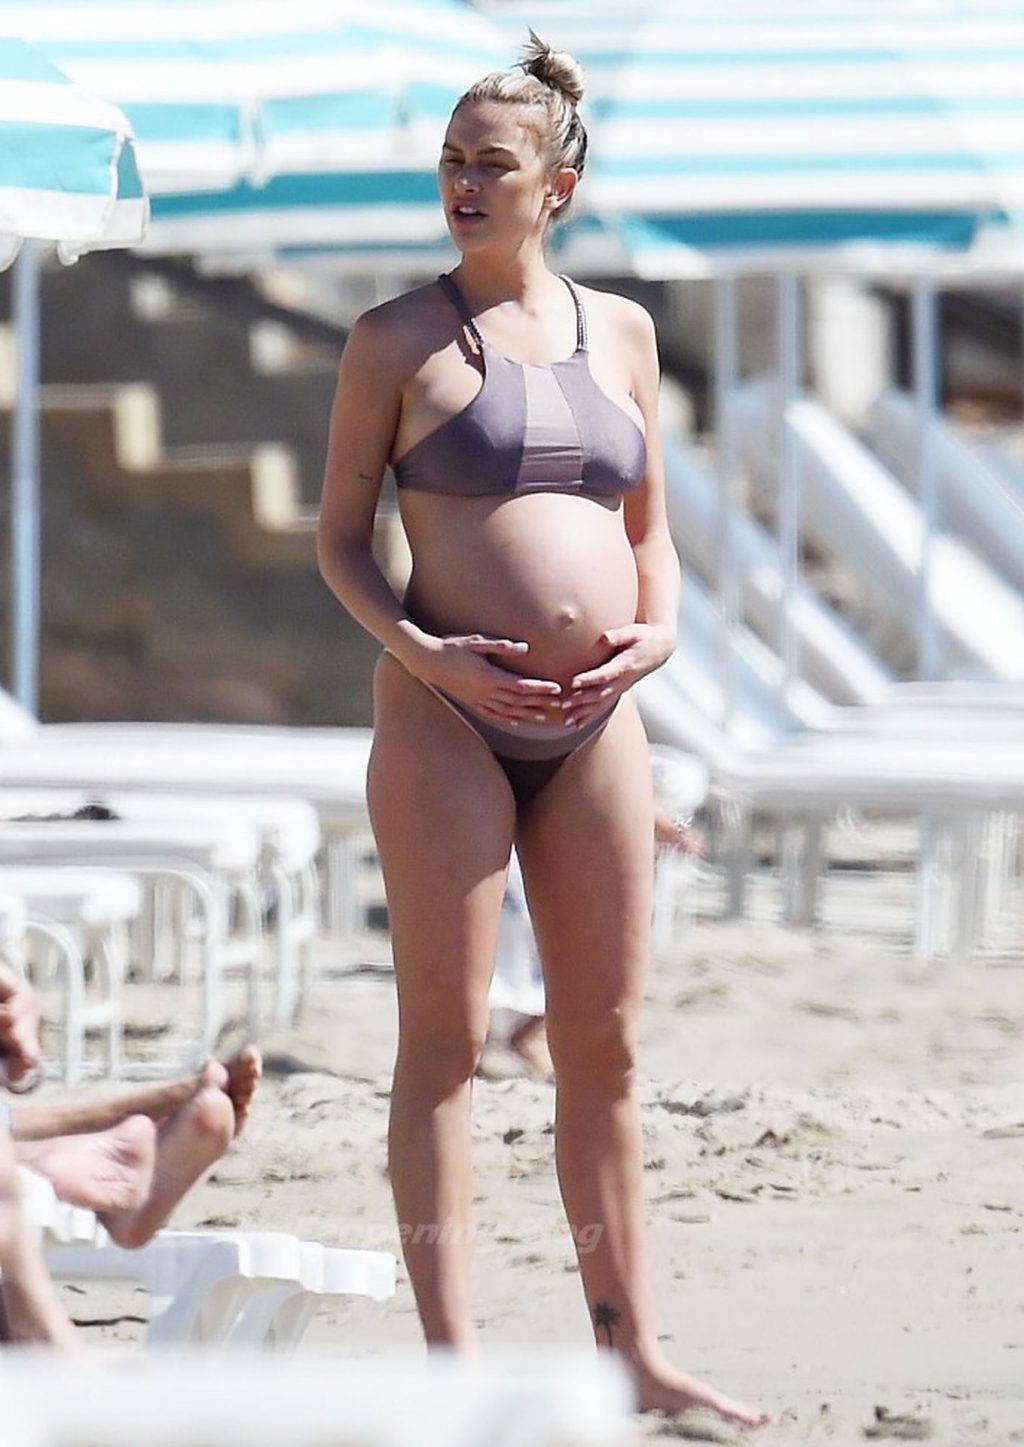 Vanderpump Rules' pregnant Brittany Cartwright and model Lala Kent sli...